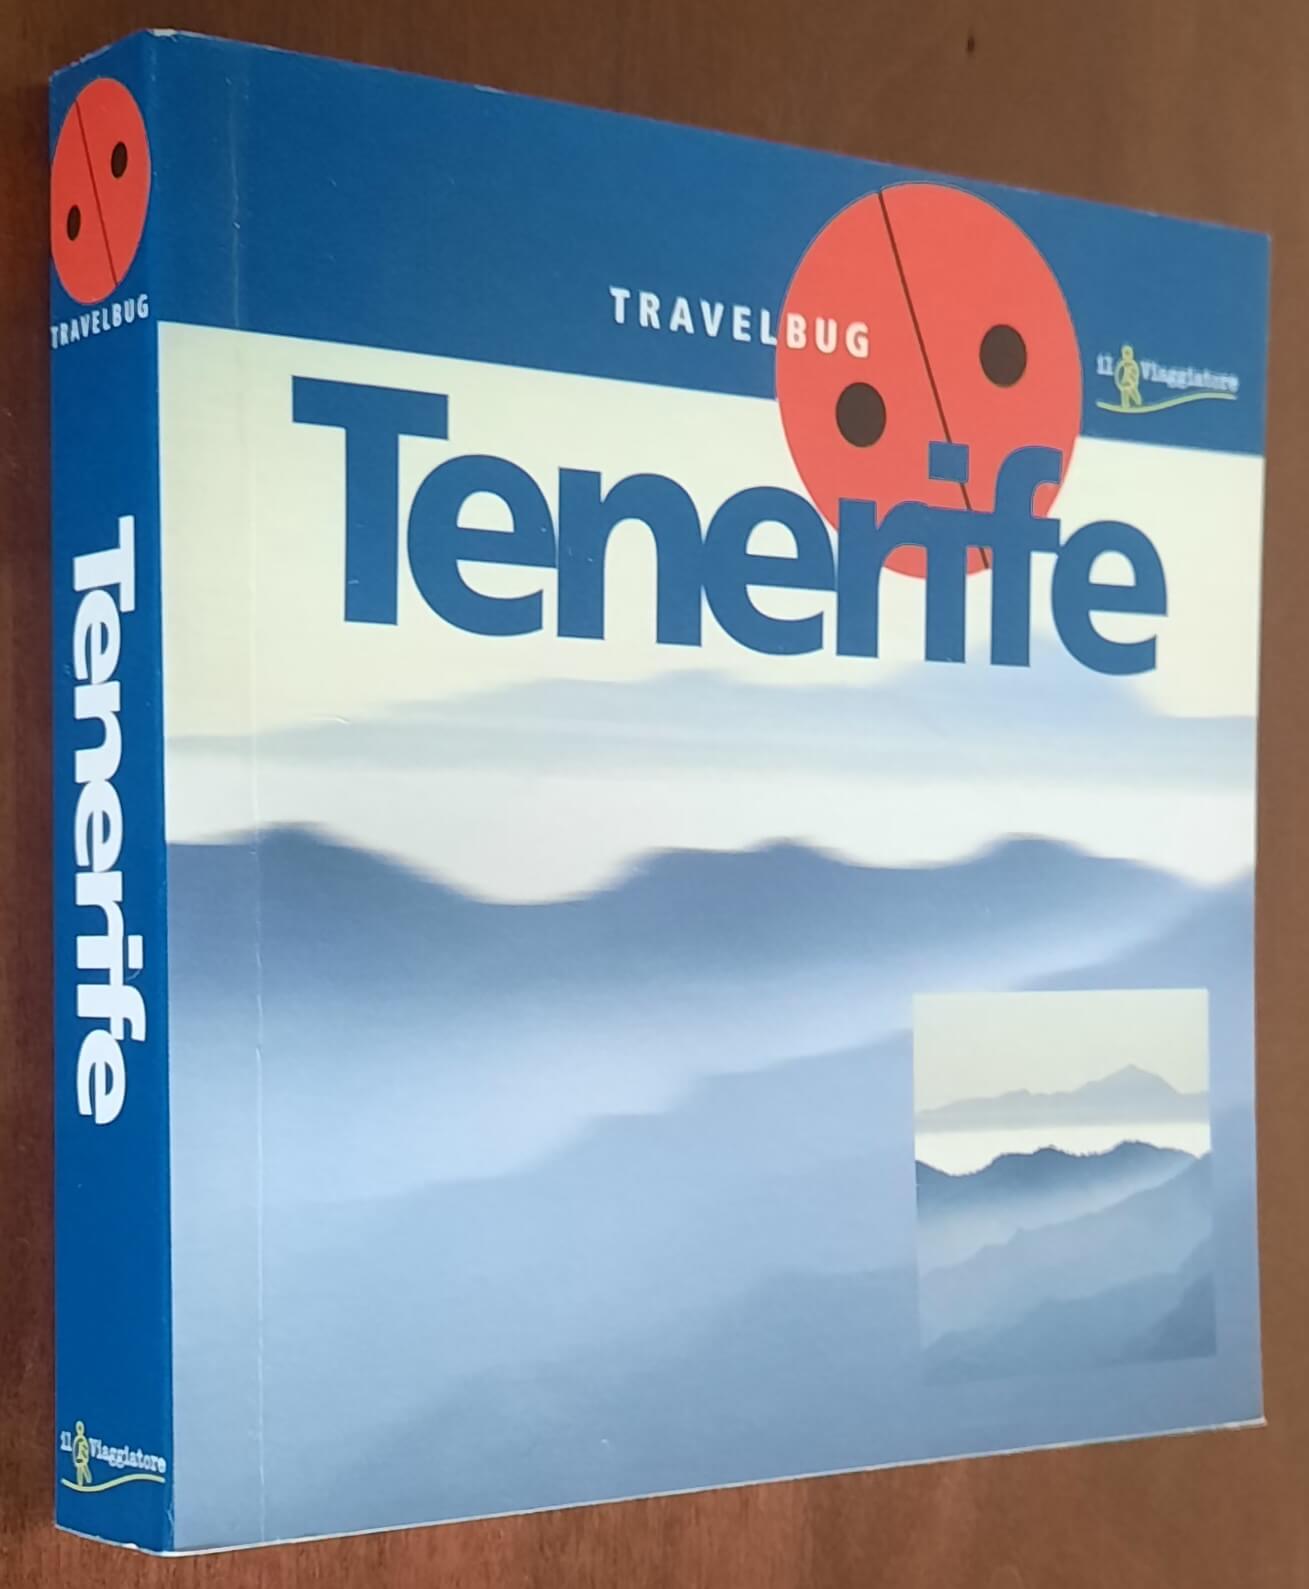 Tenerife - Guide Travelbug - Touring Club